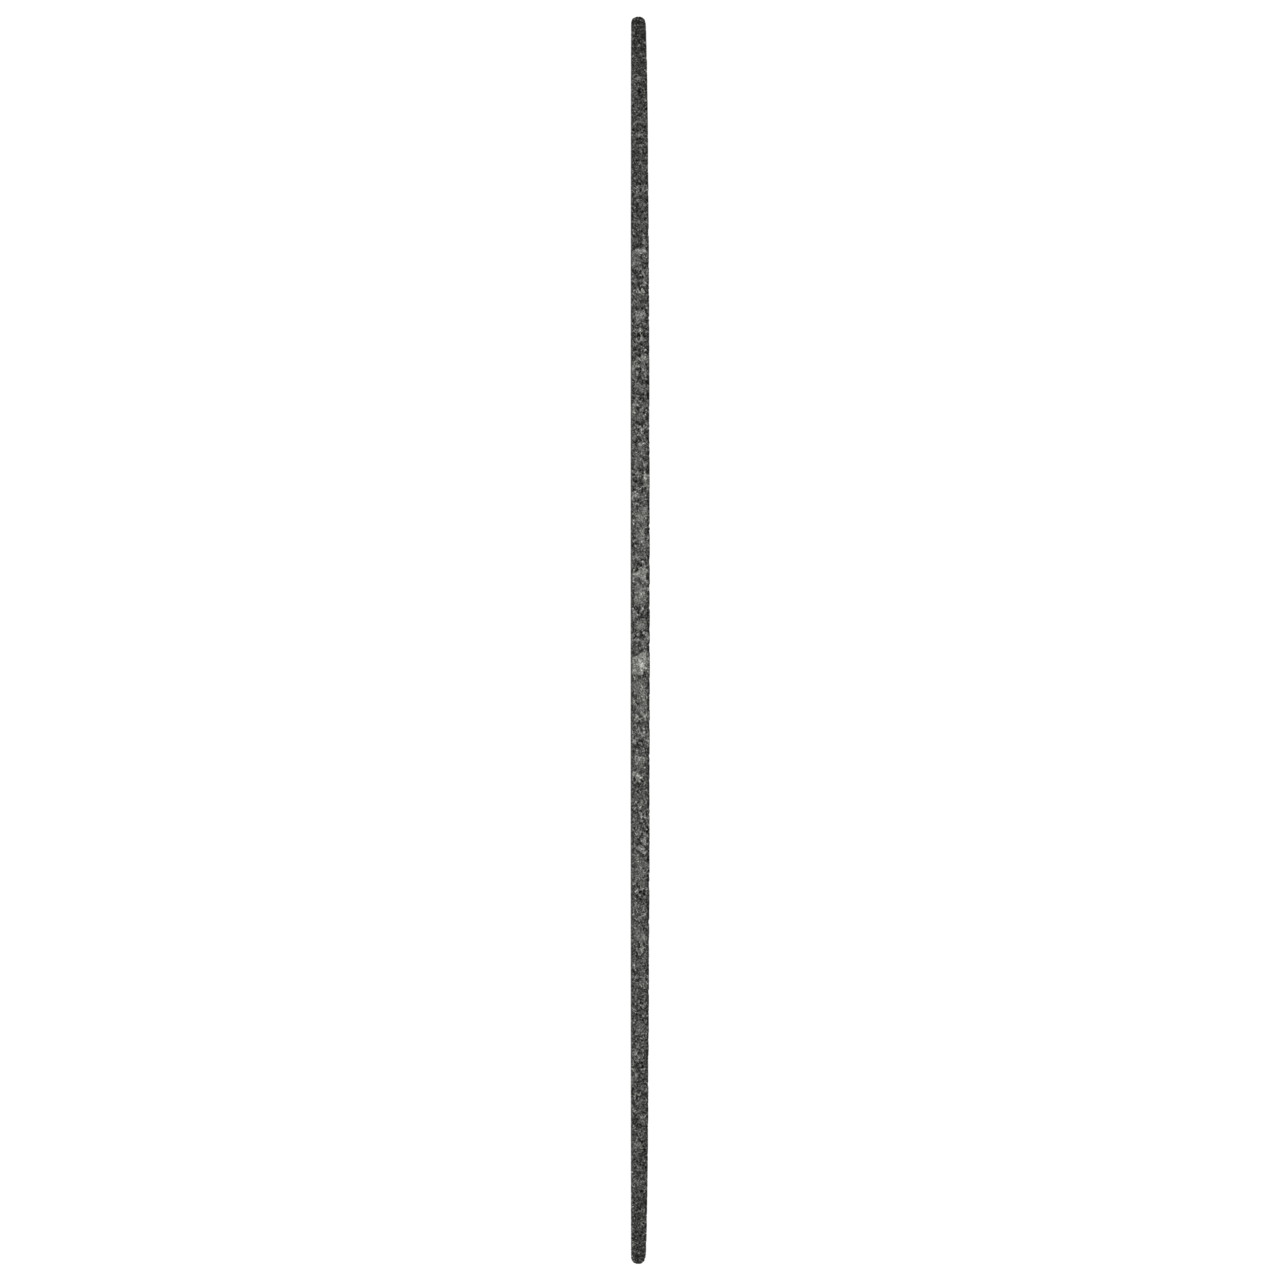 Dischi da taglio Tyrolit DxDxH 75x1x10 Per acciaio inox, forma: 41 - versione diritta, Art. 299270